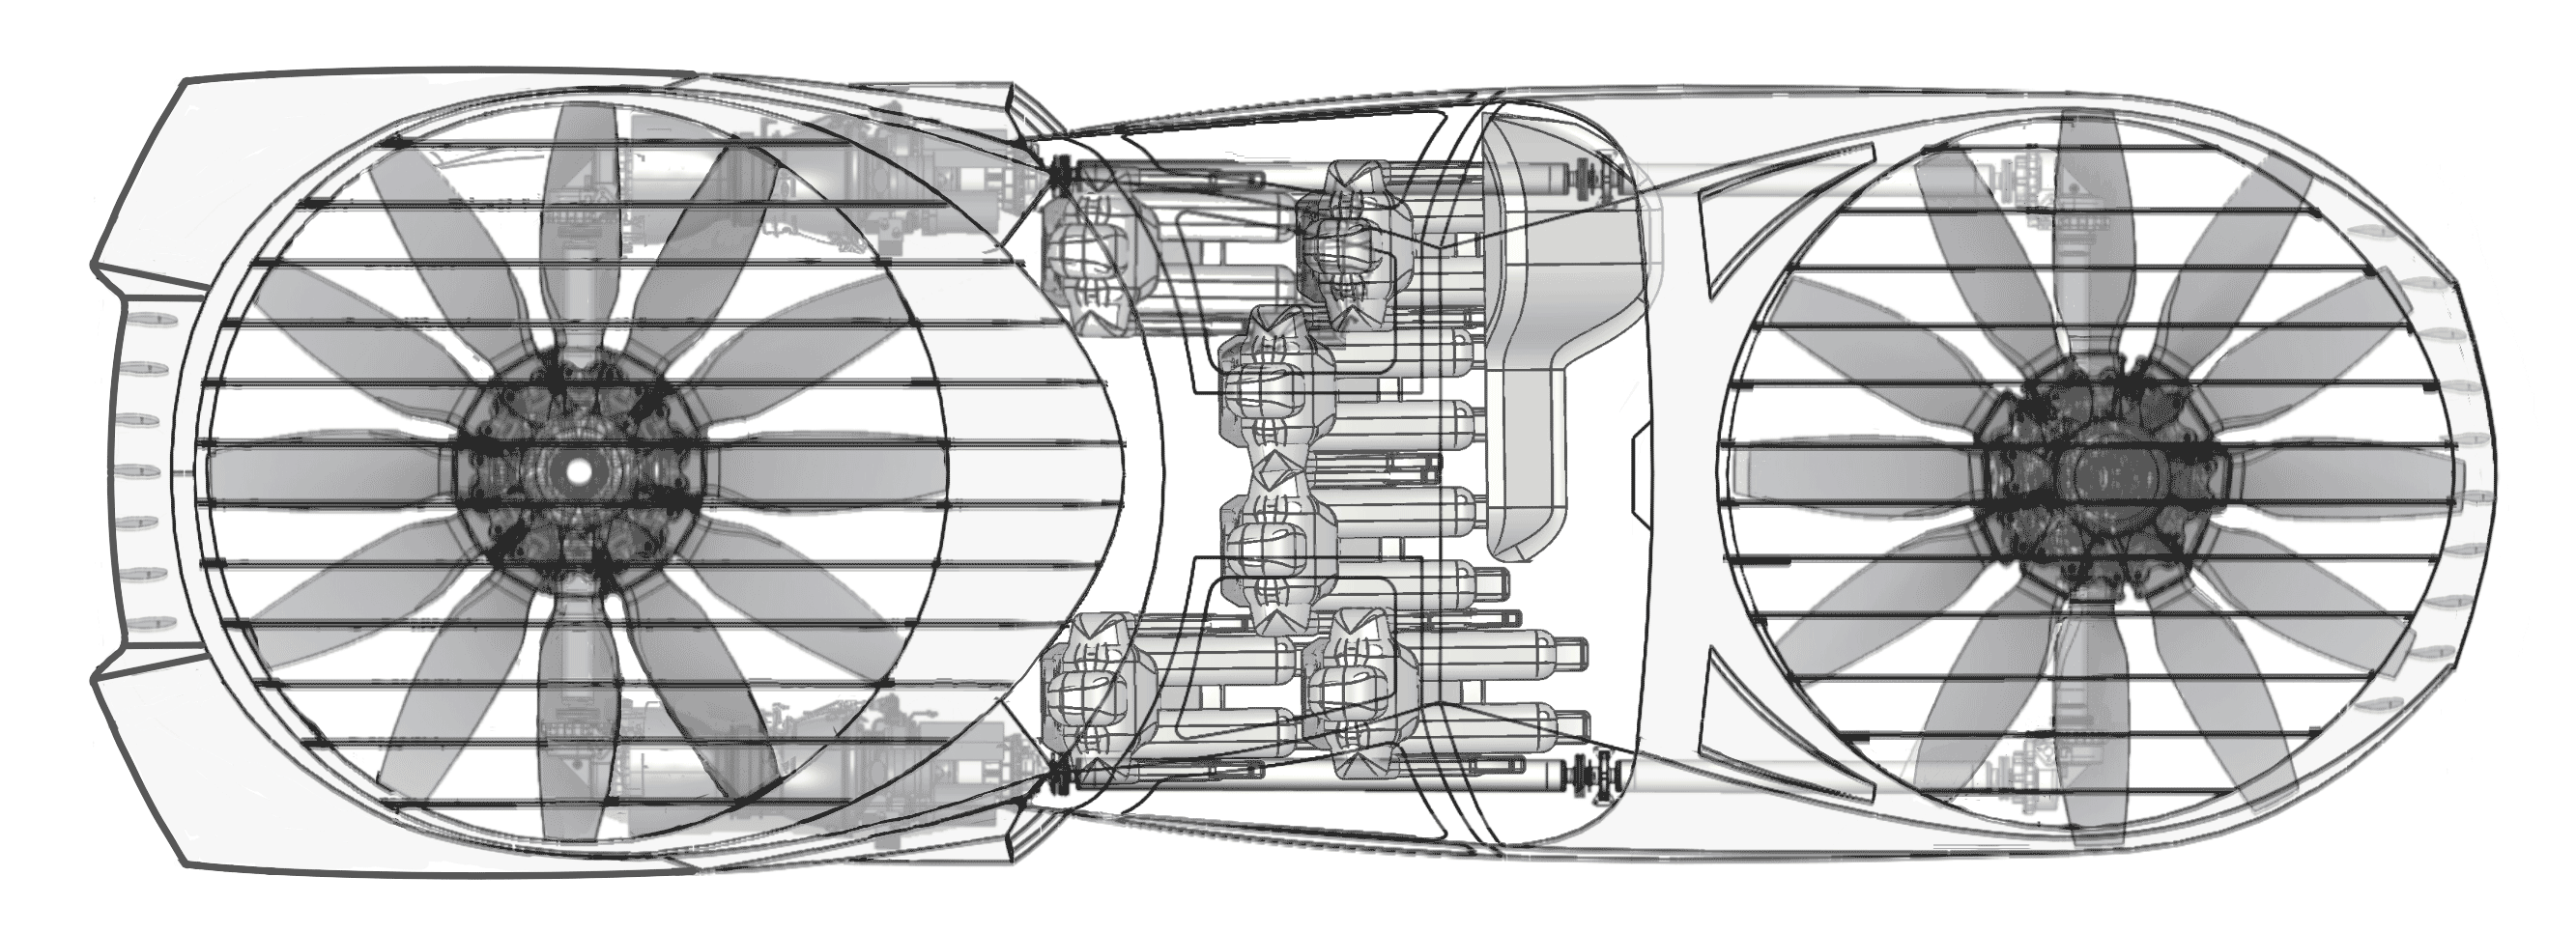 layered image of twin engine